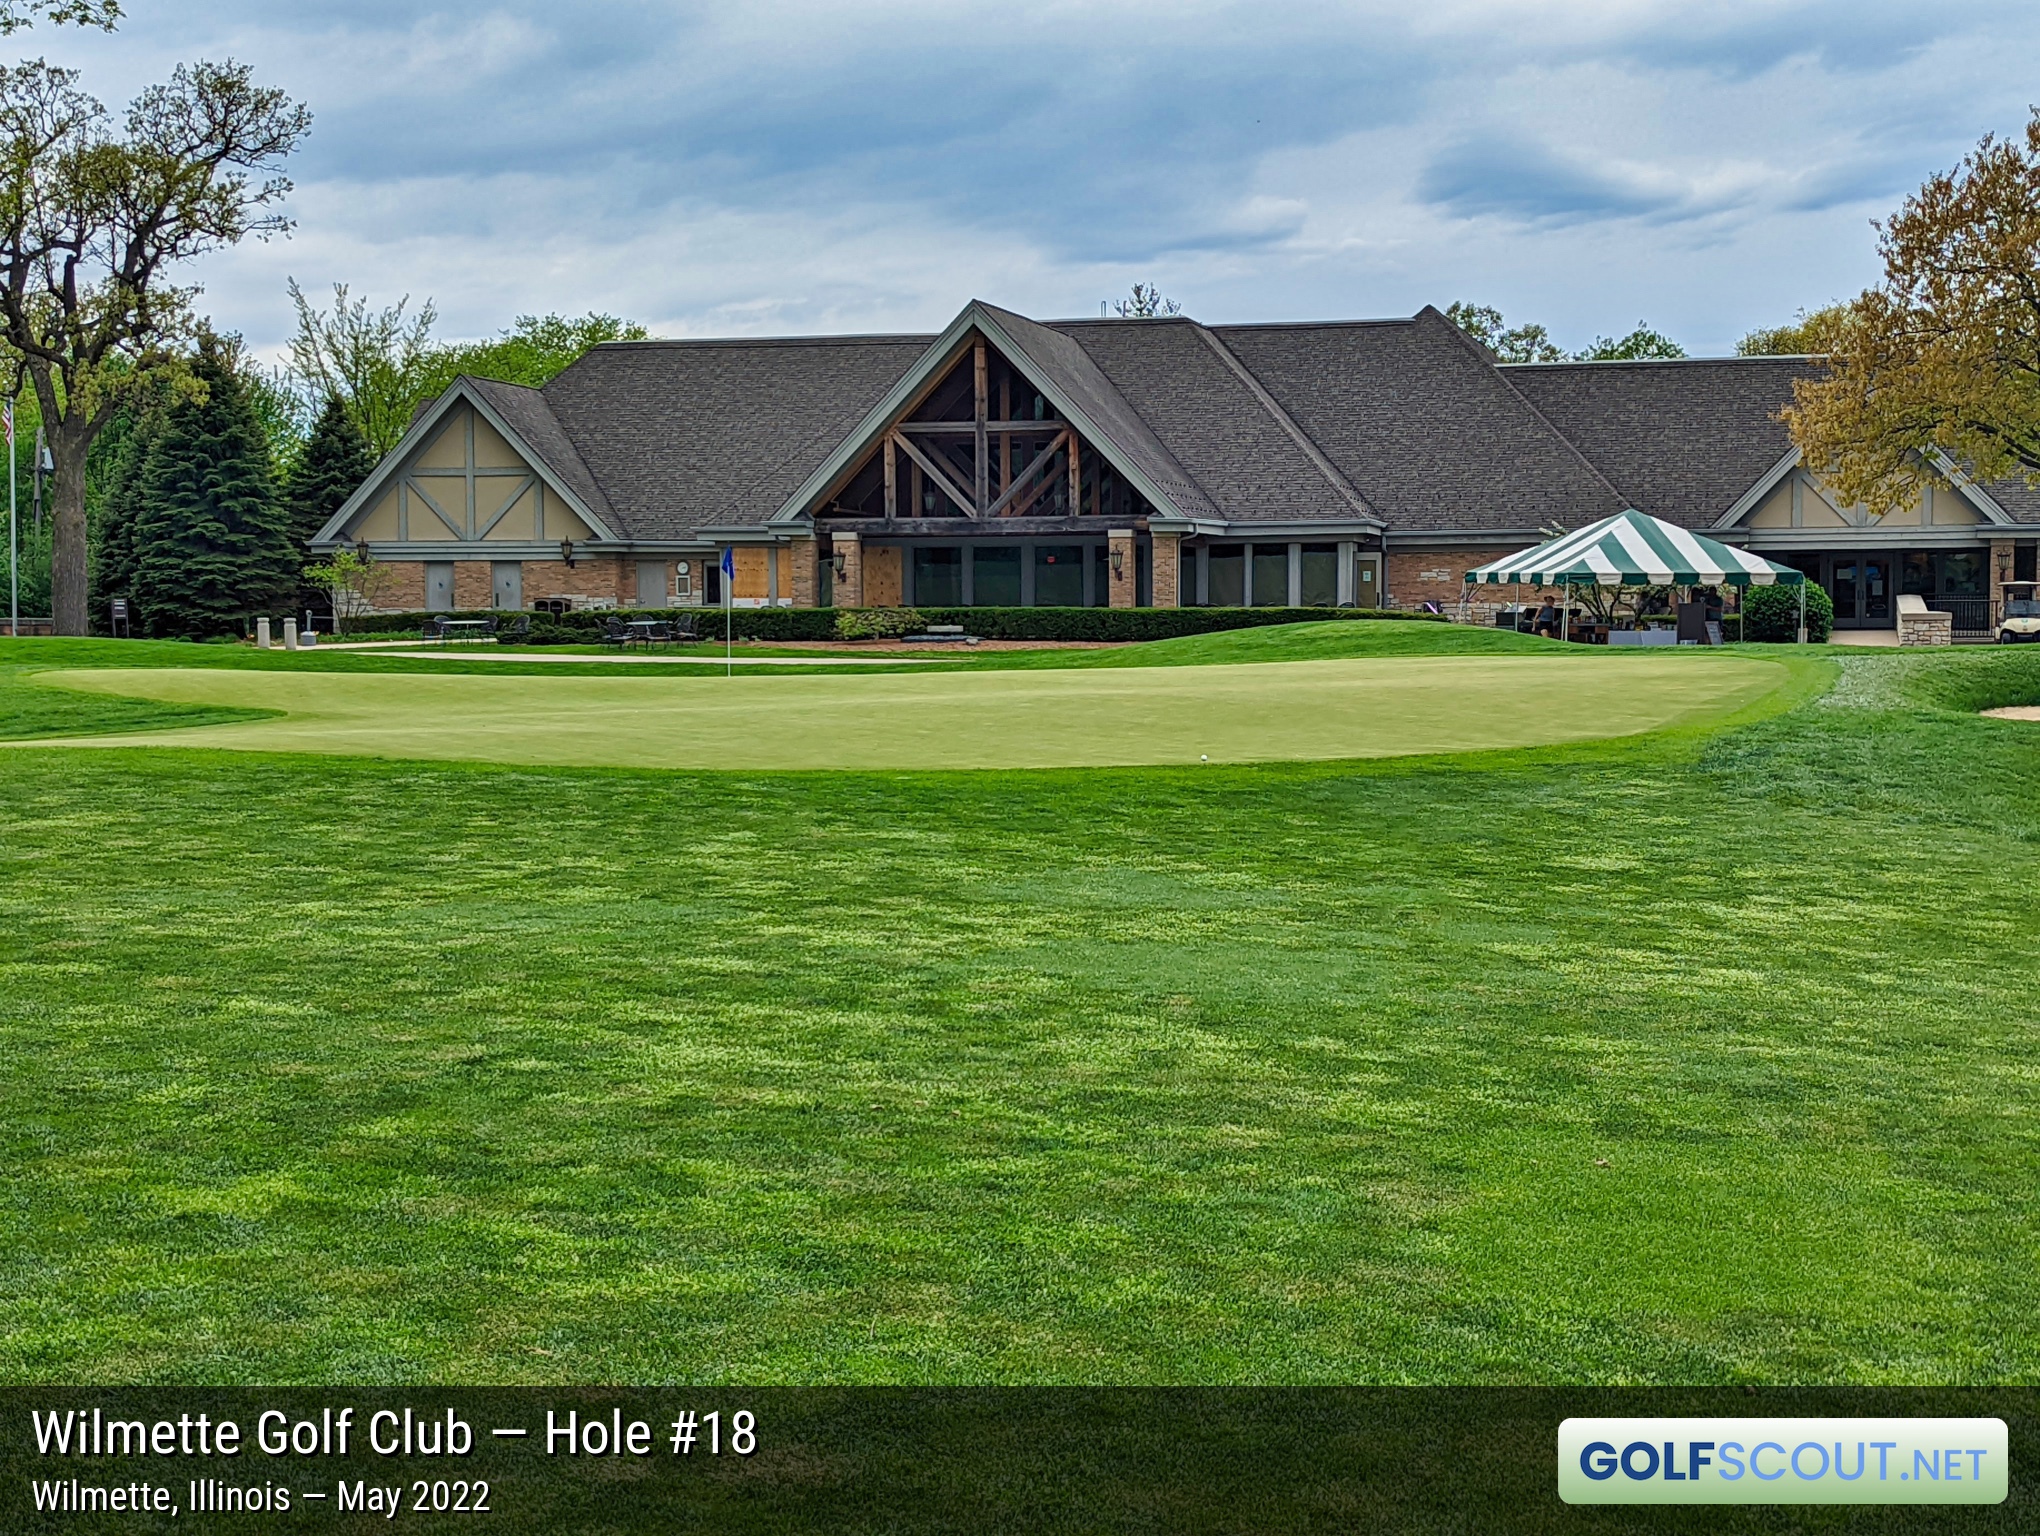 Photo of hole #18 at Wilmette Golf Club in Wilmette, Illinois. 